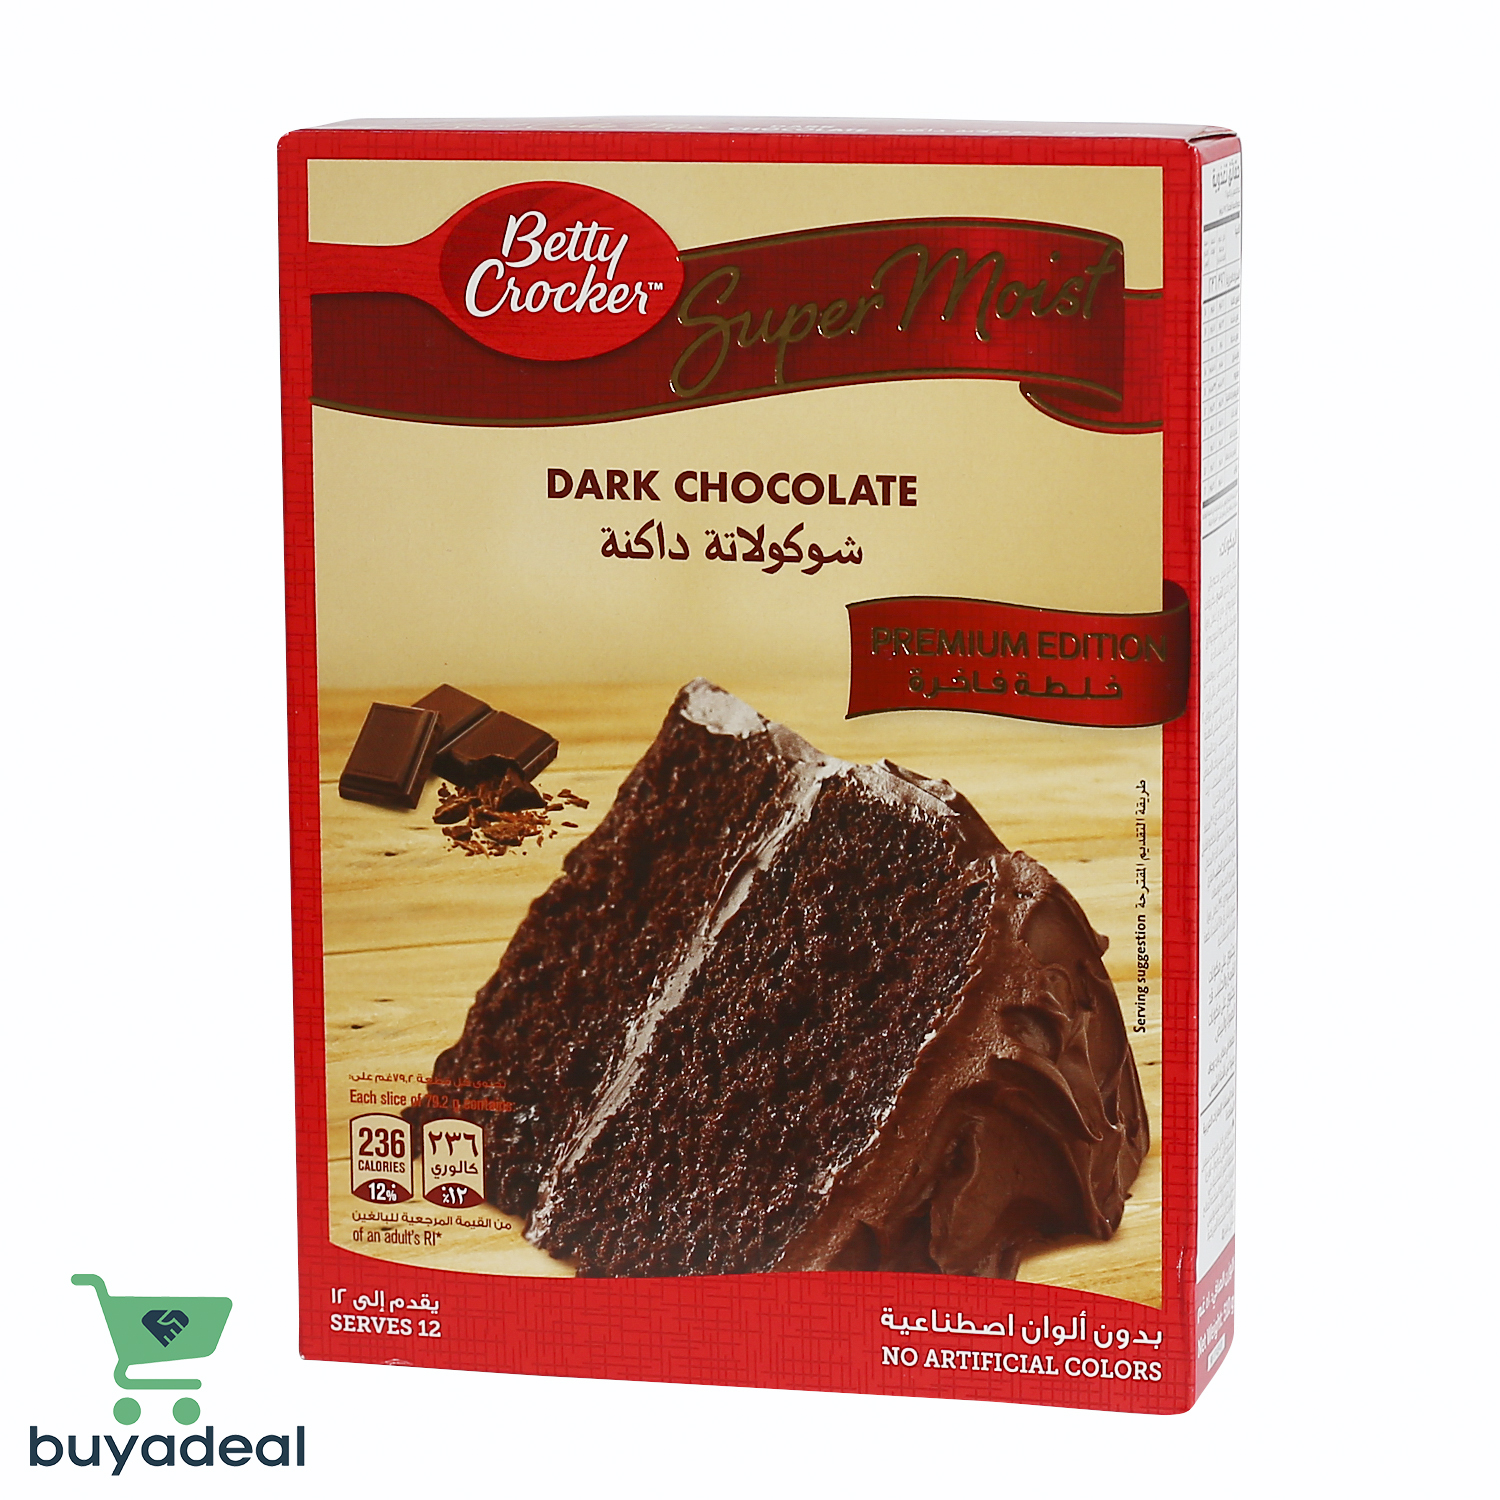 Buyadeal Product Betty Crocker Dark chocolate 510g